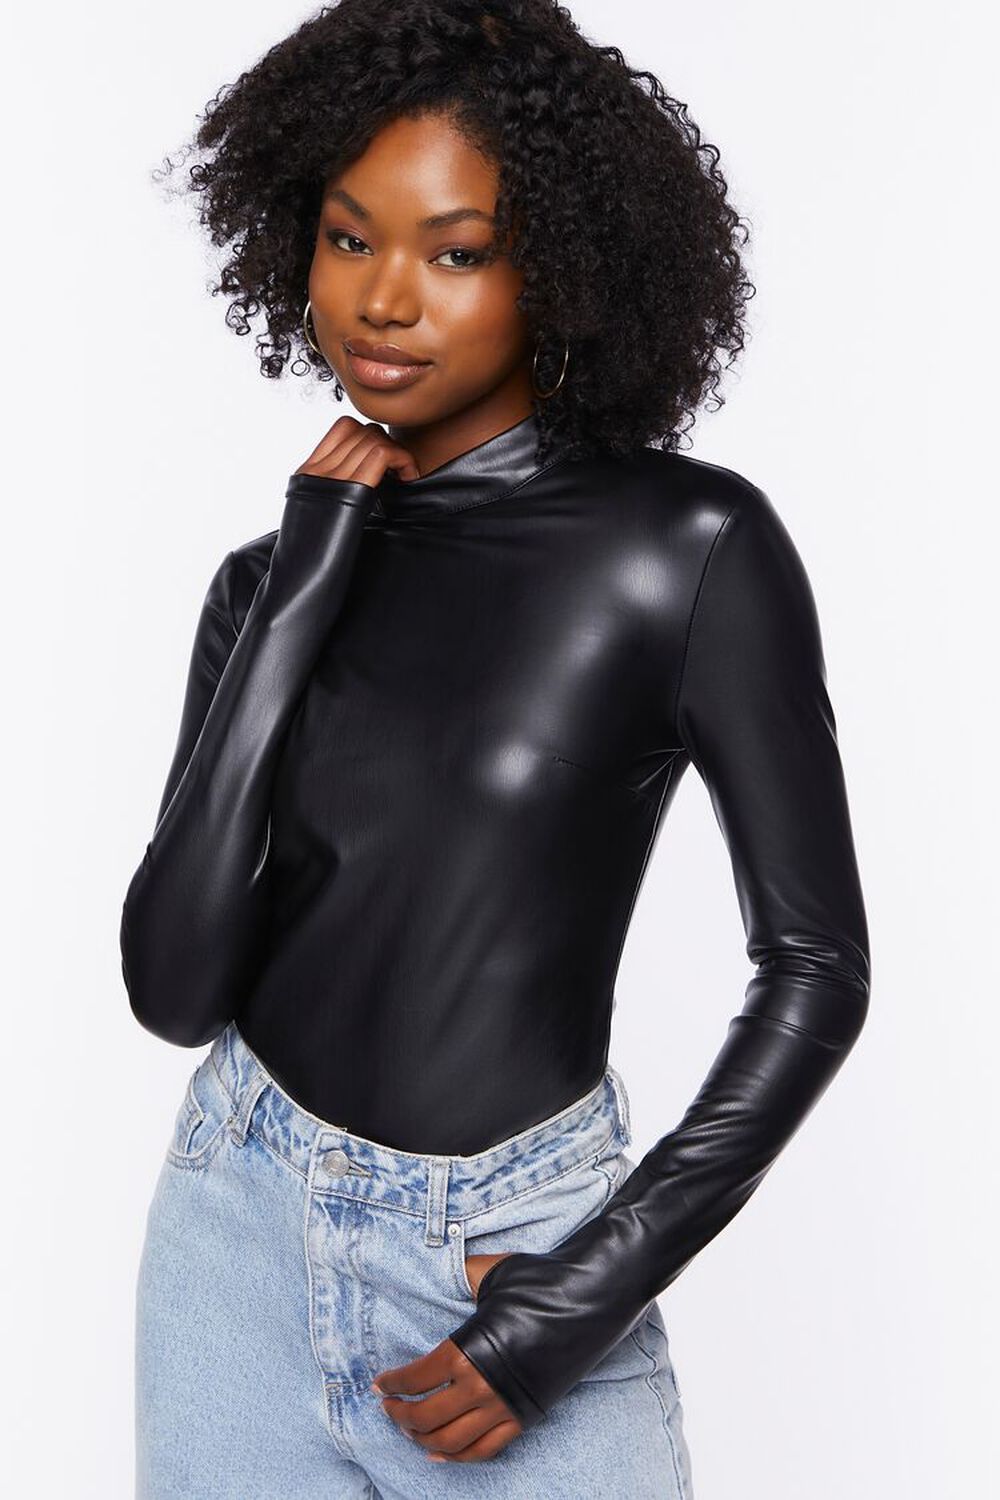 BLACK Faux Leather Long-Sleeve Bodysuit, image 1